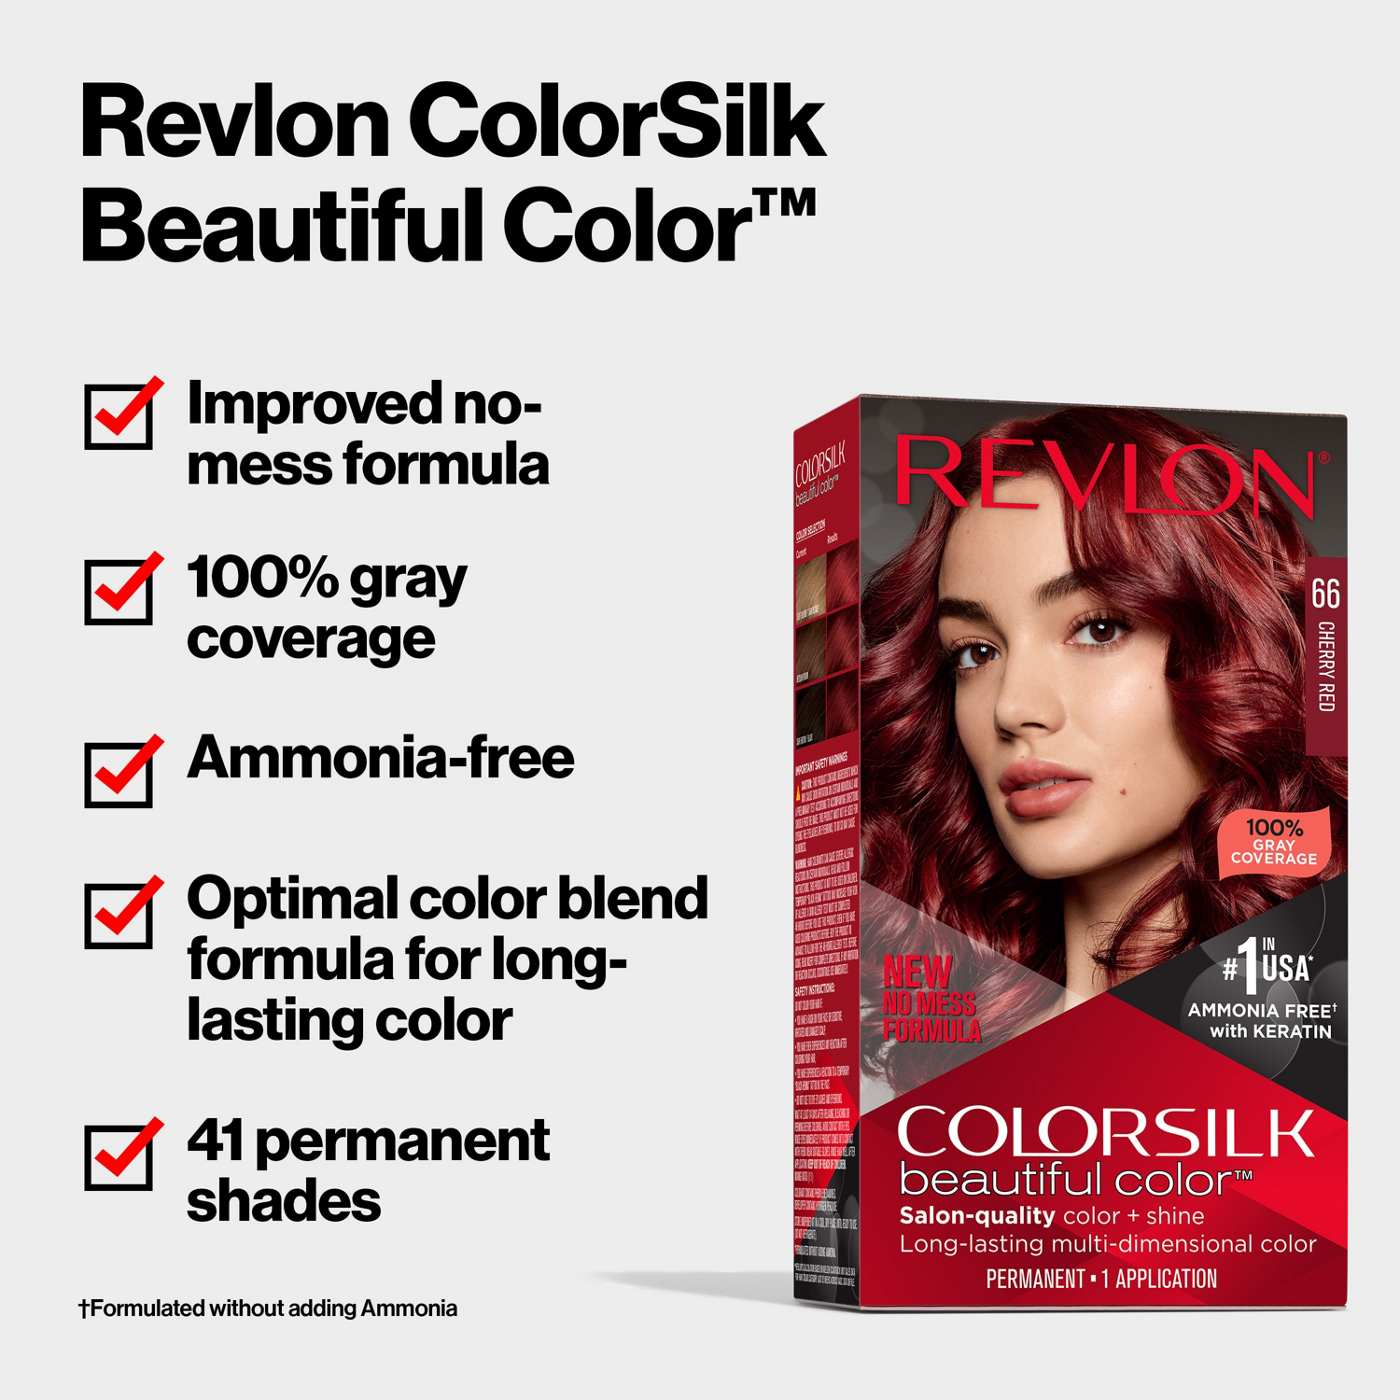 Revlon ColorSilk Hair Color - 66 Cherry Red; image 2 of 5